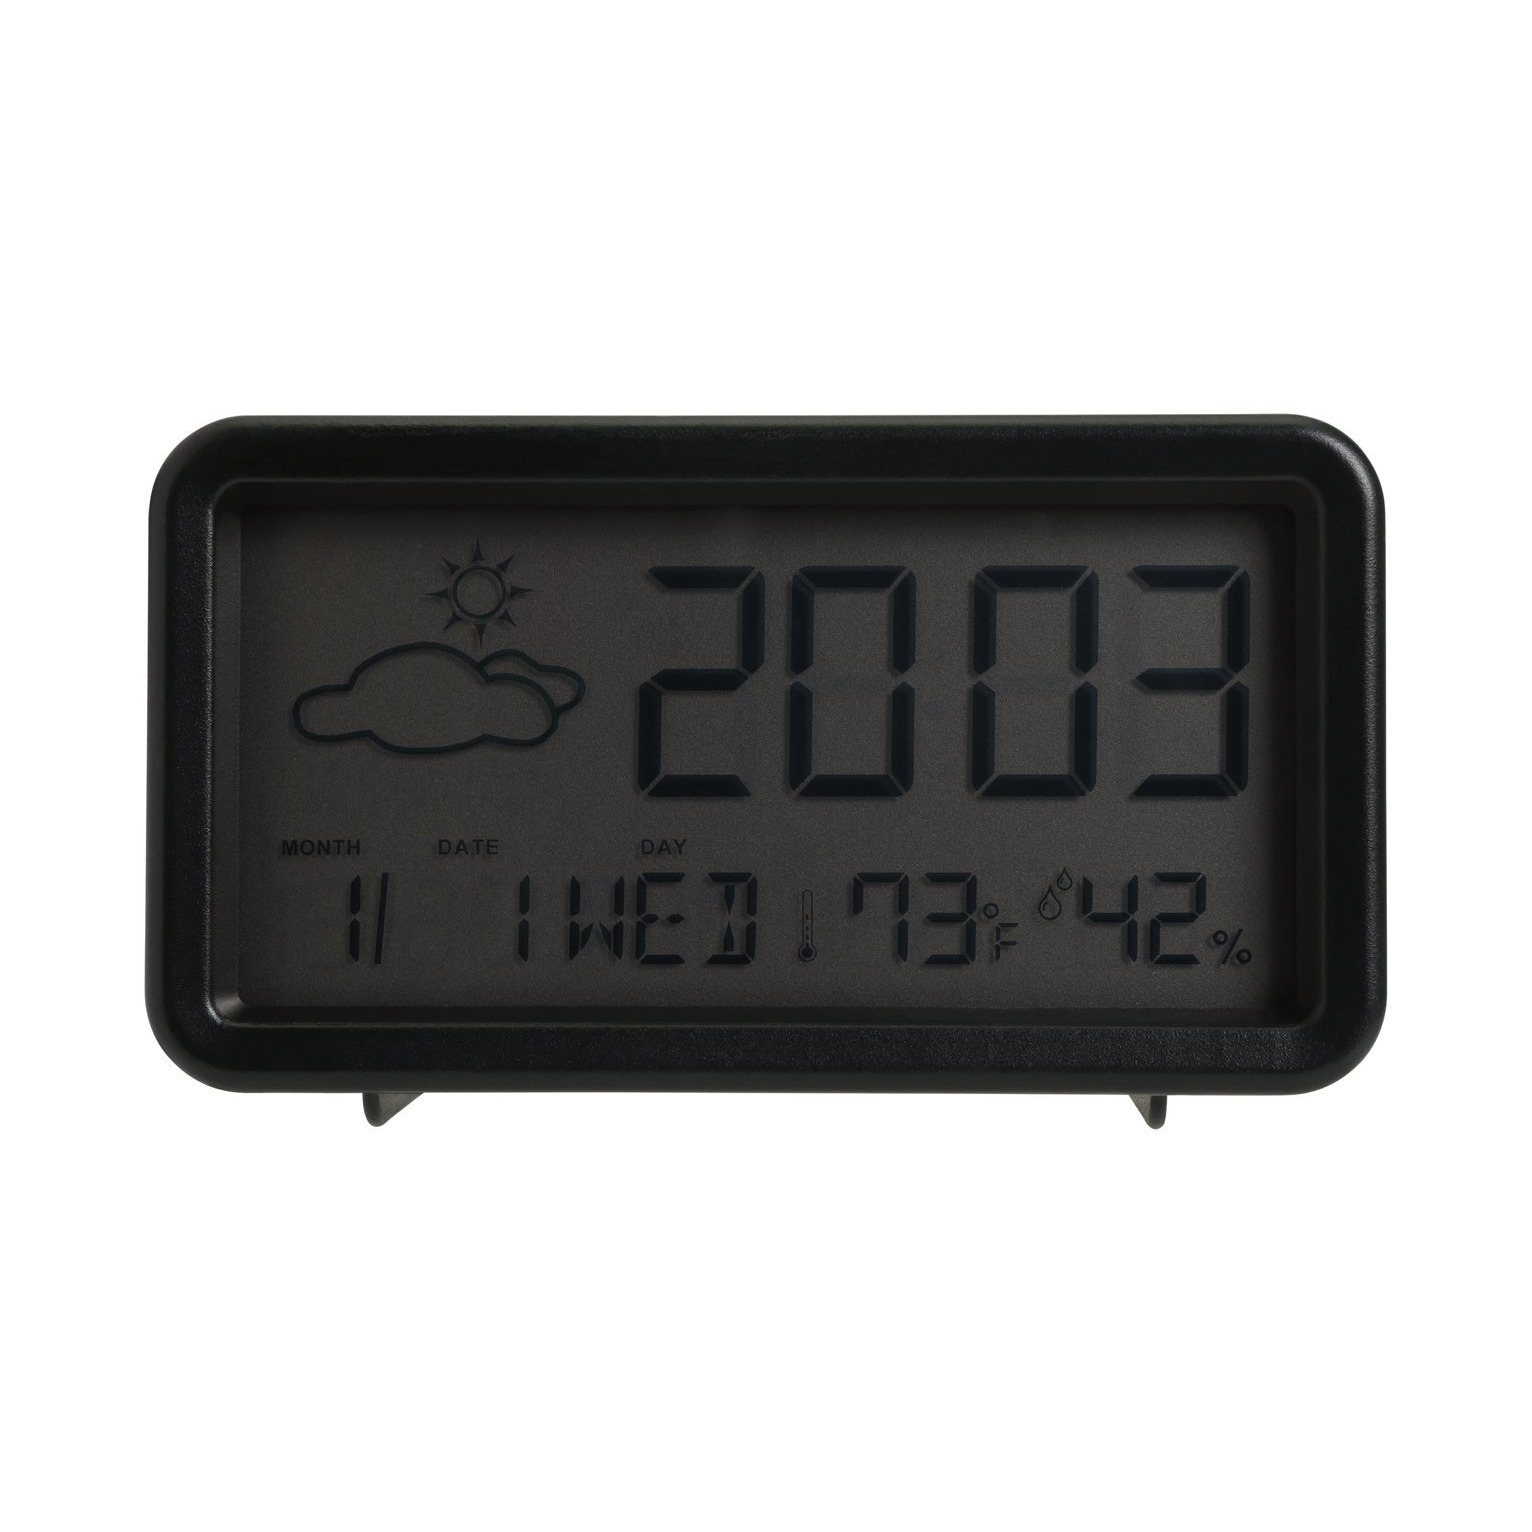 Constant LCD Display Digital Alarm Clock - Black - image 1